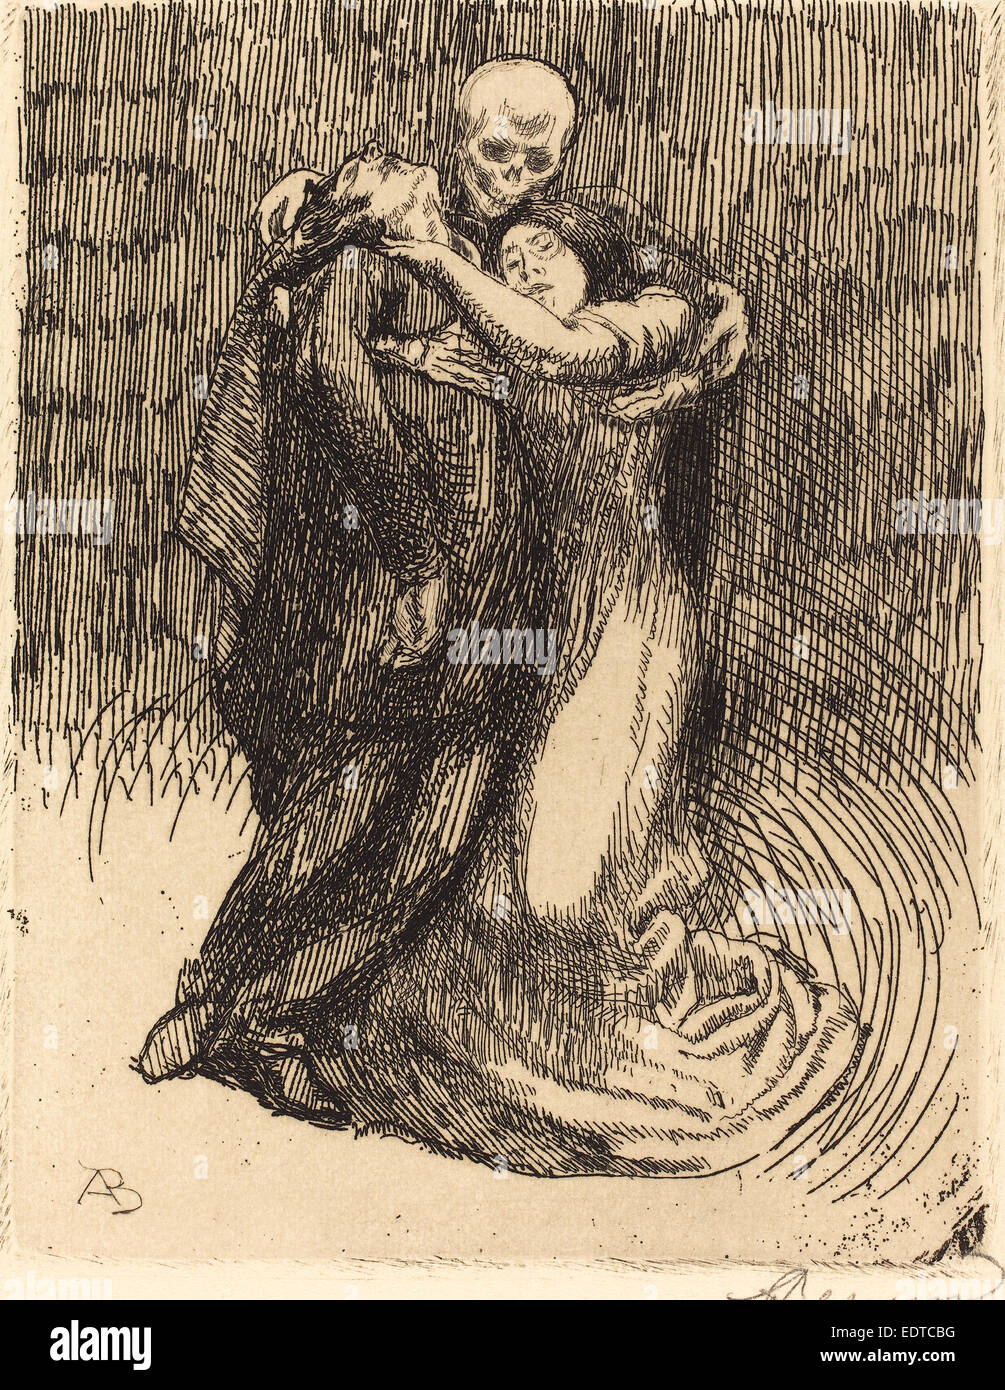 Albert Besnard, amore consacrato (Elle consacre l'amour), francese, 1849 - 1934, 1900, l'attacco in nero Foto Stock